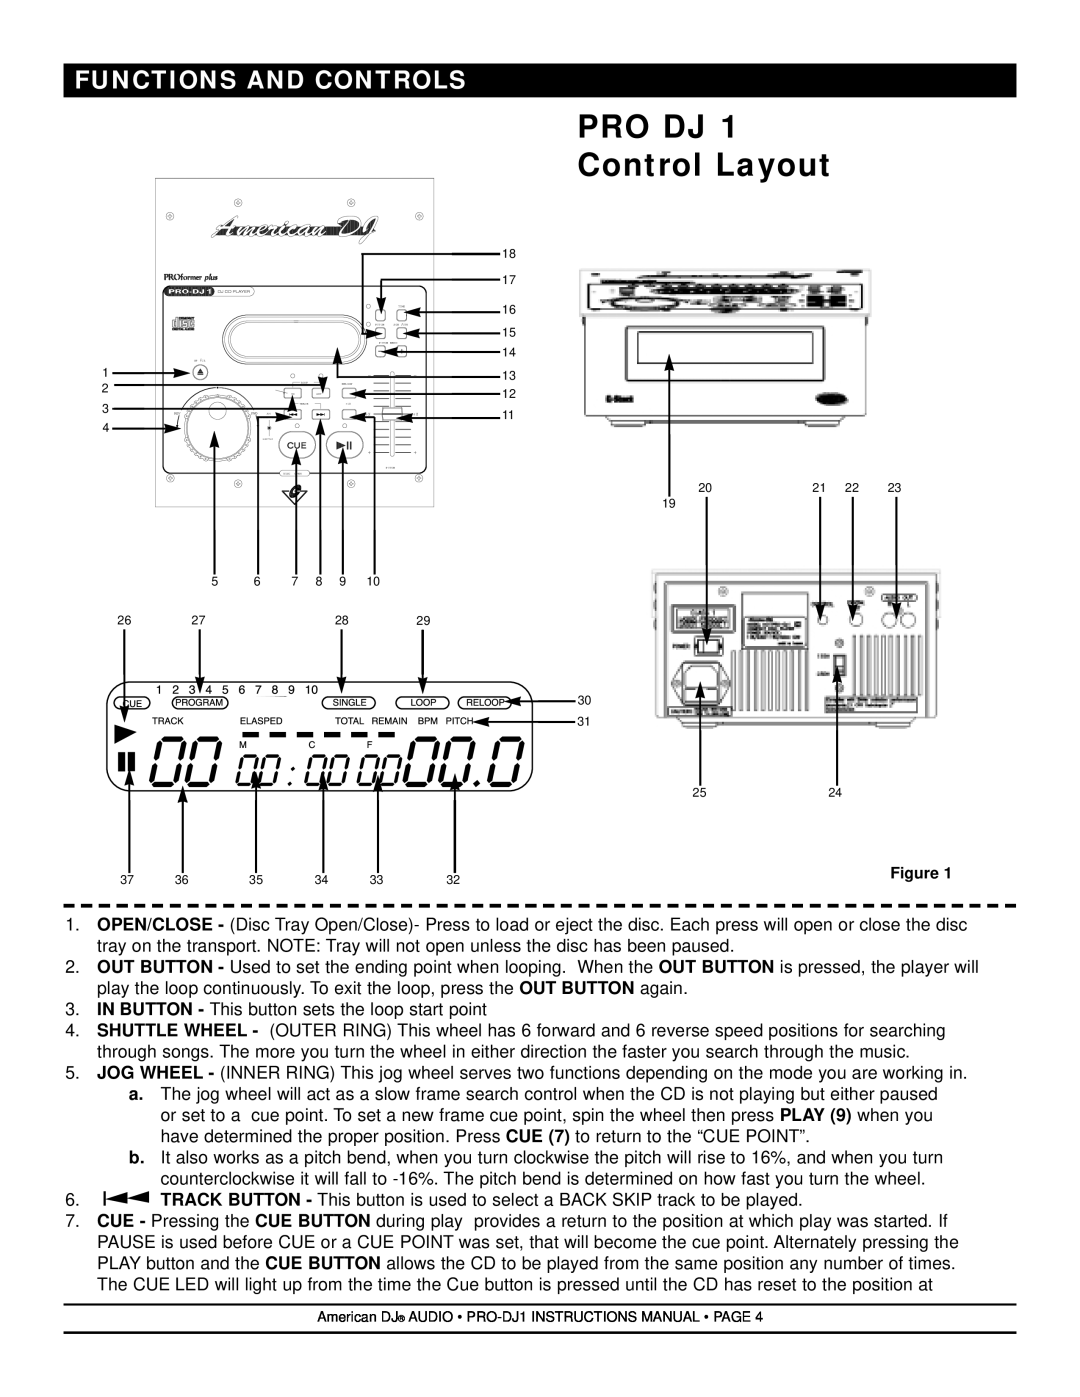 American DJ PRO-DJ1 manual Functions And Controls, PRO DJ Control Layout 